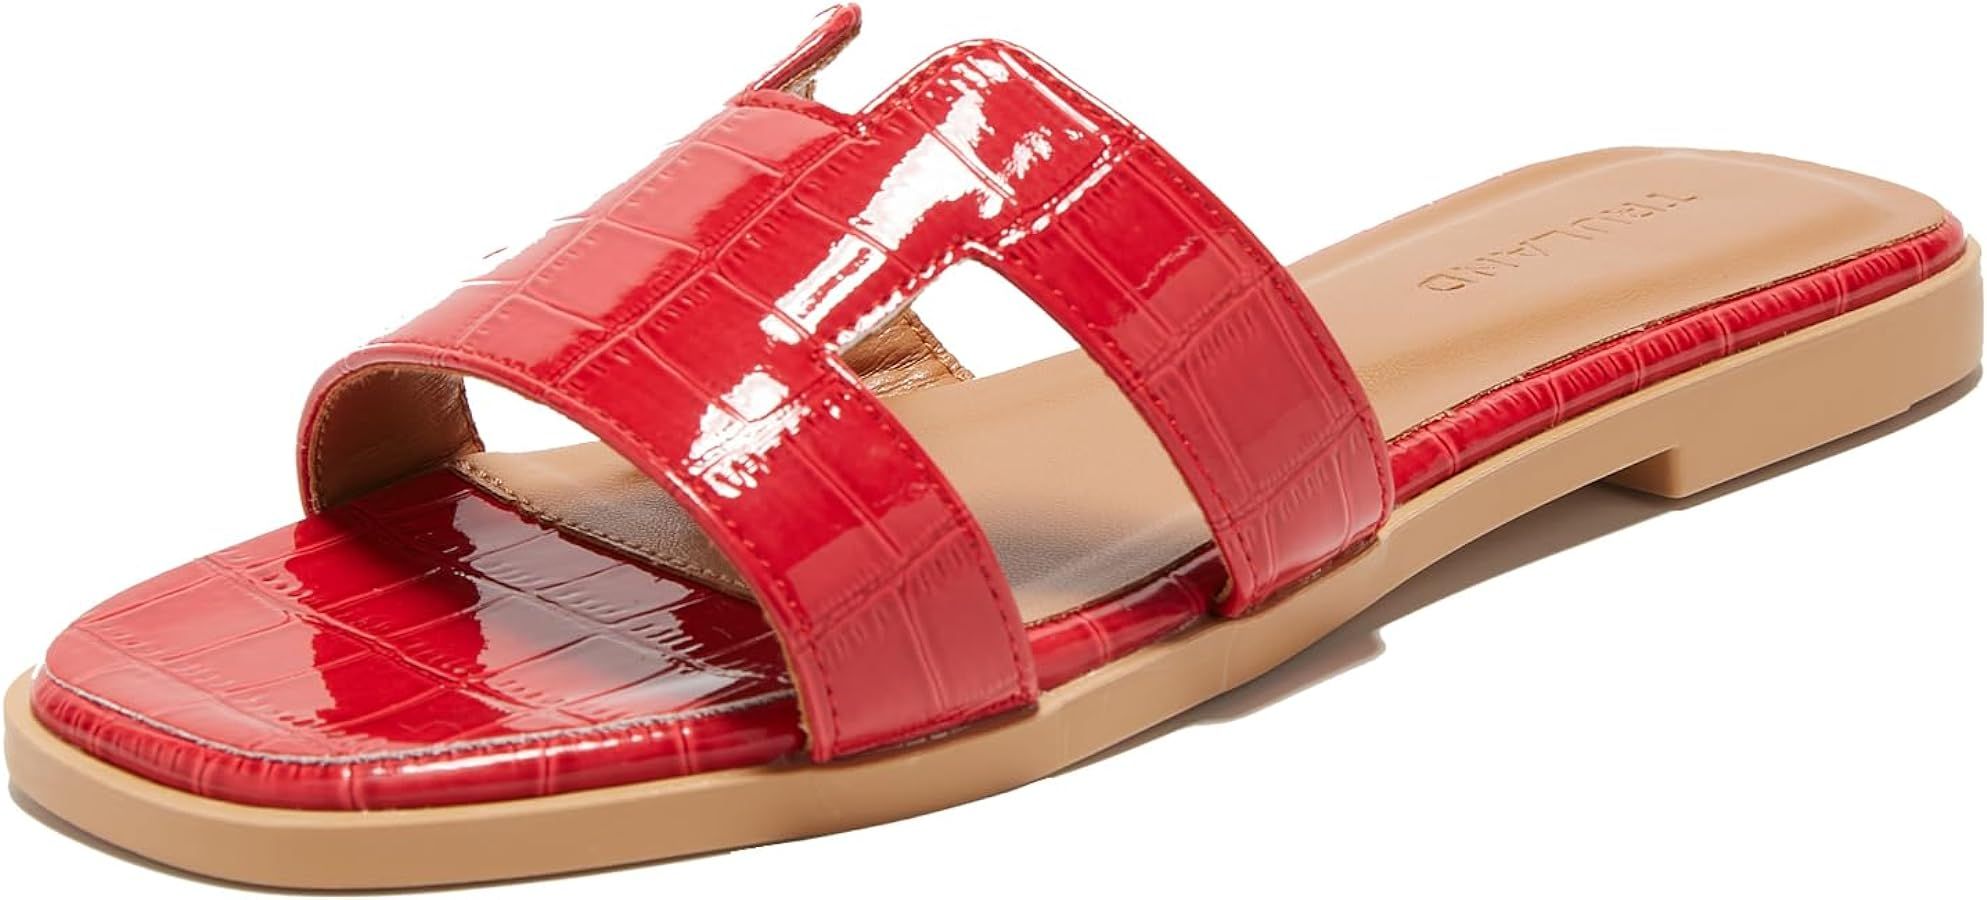 TRULAND H Strap Flat Slide Sandals for Women - Cute Fashion Open Toe Summer Dressy Sandals | Amazon (US)